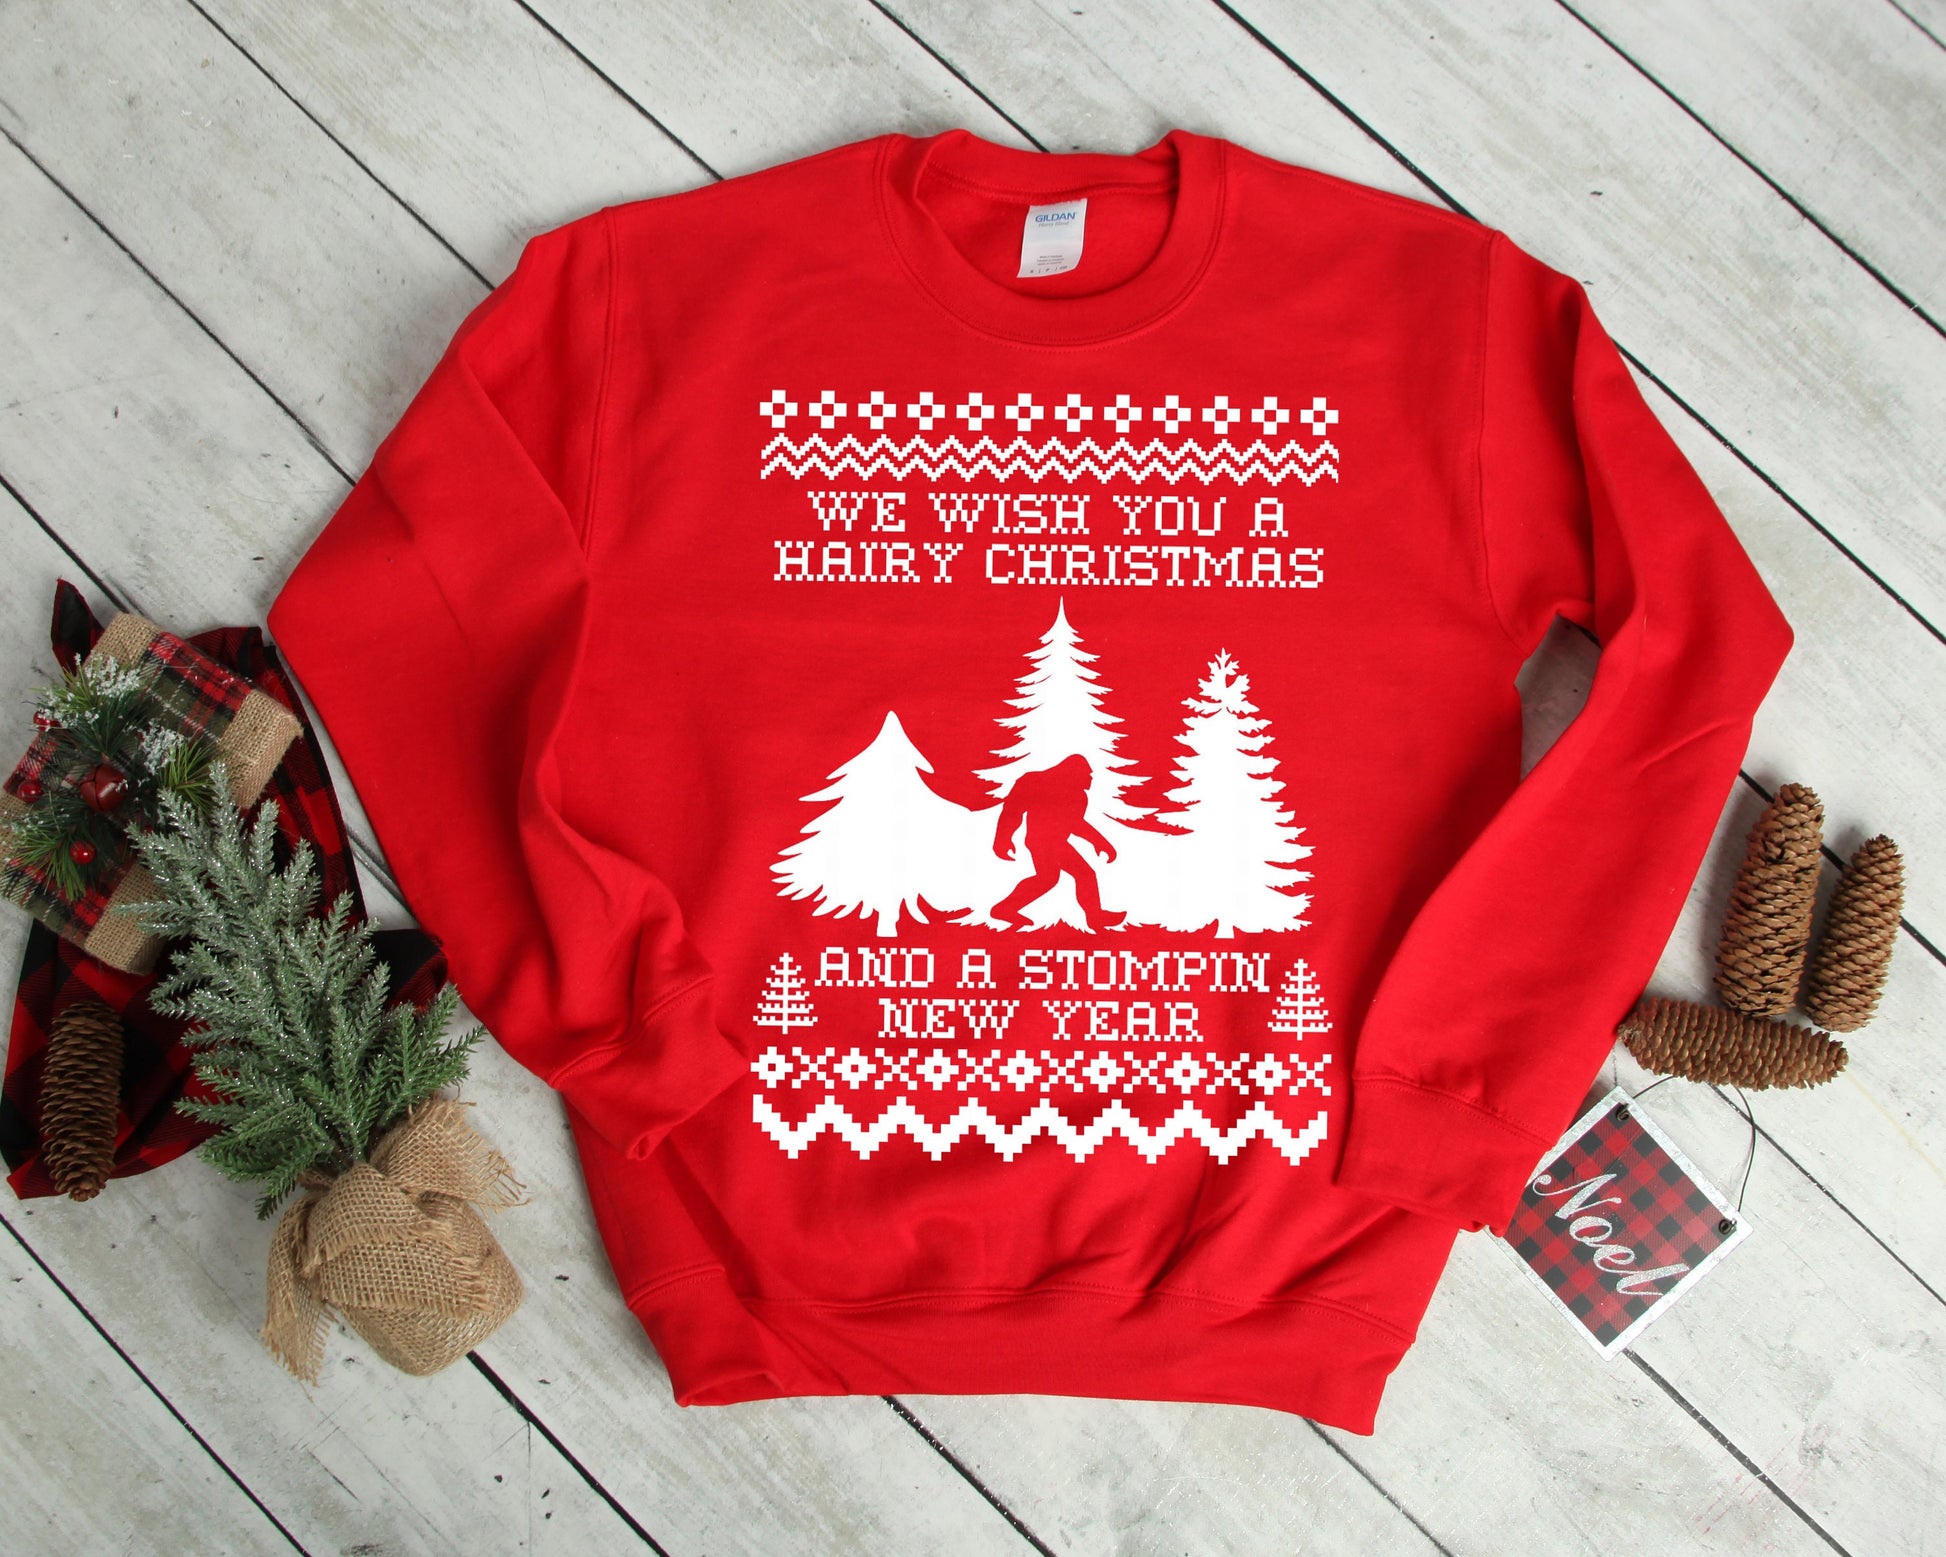 We Wish You a Hairy Christmas Bigfoot Ugly Christmas Sweater Crewneck Fleece Pullover Sweatshirt - Christmas Party - Bigfoot Believer